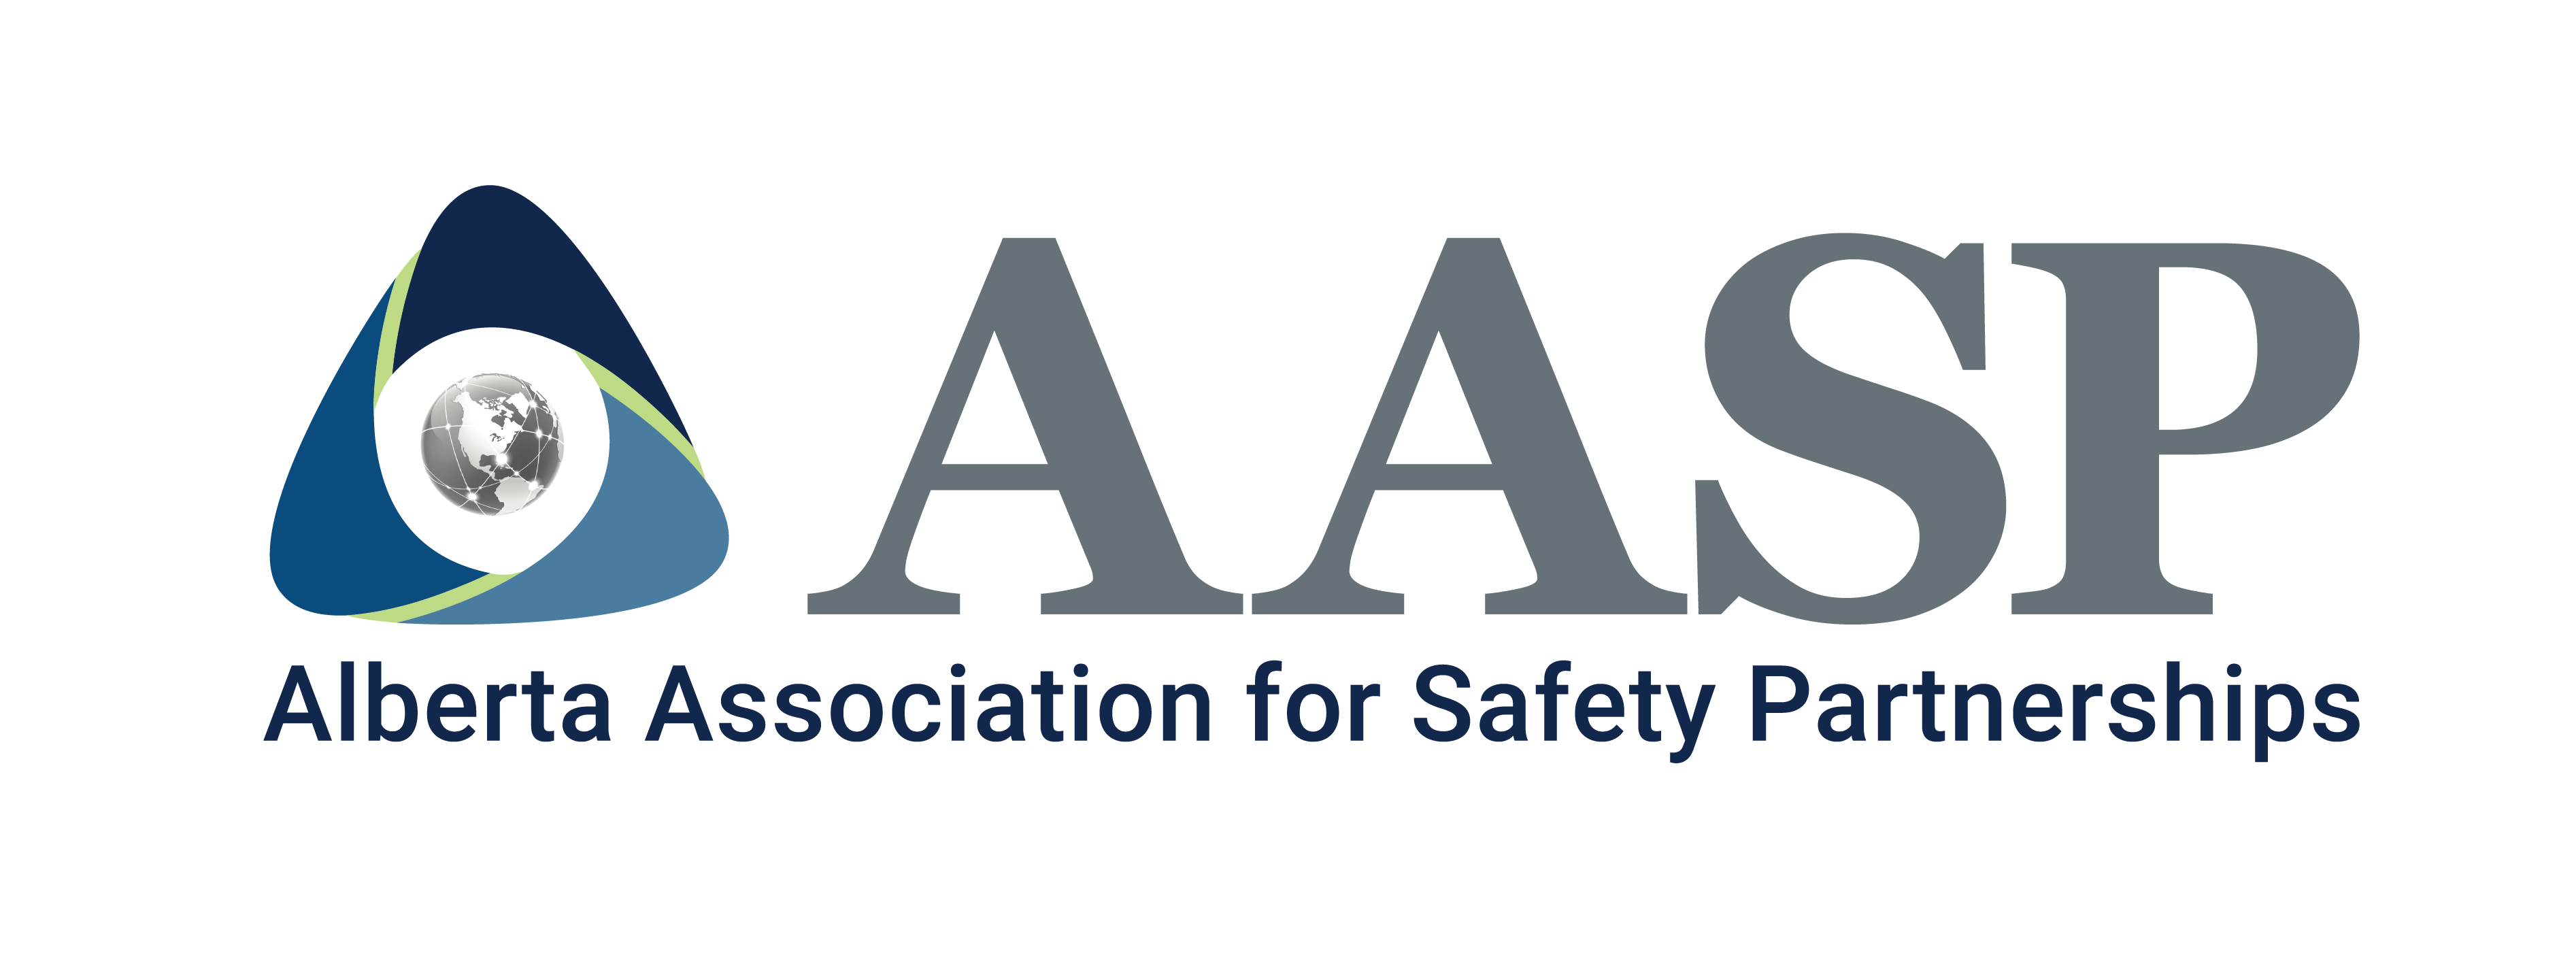 Alberta Association For Safety Partnership Logo